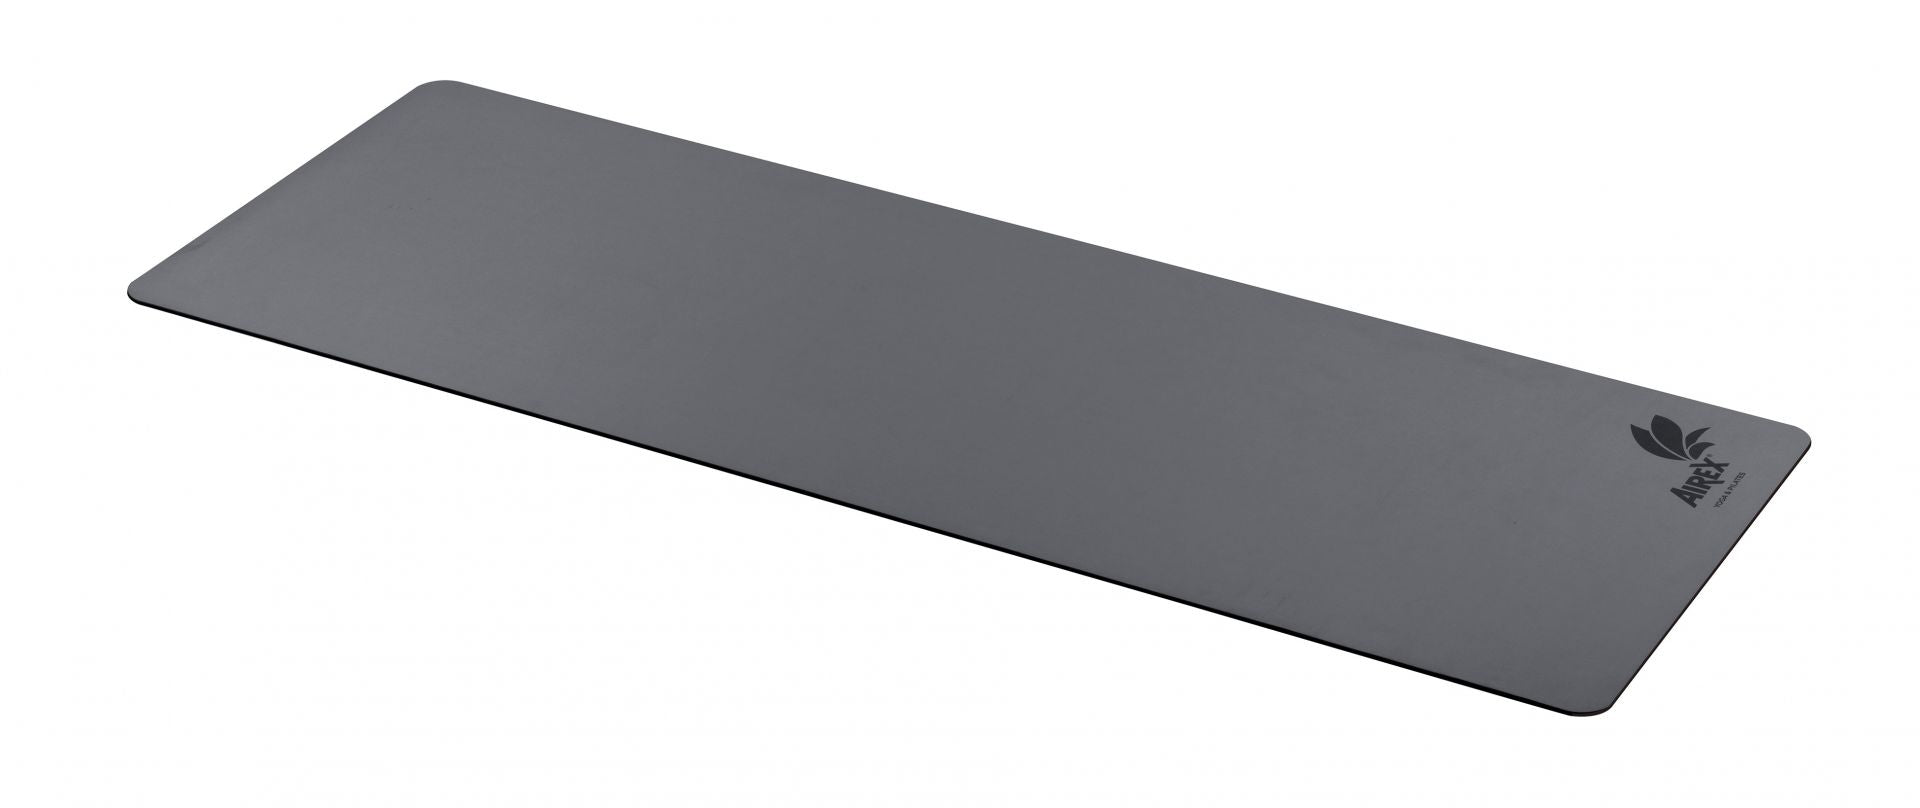 Yoga Eco Grip mat – Airex-US